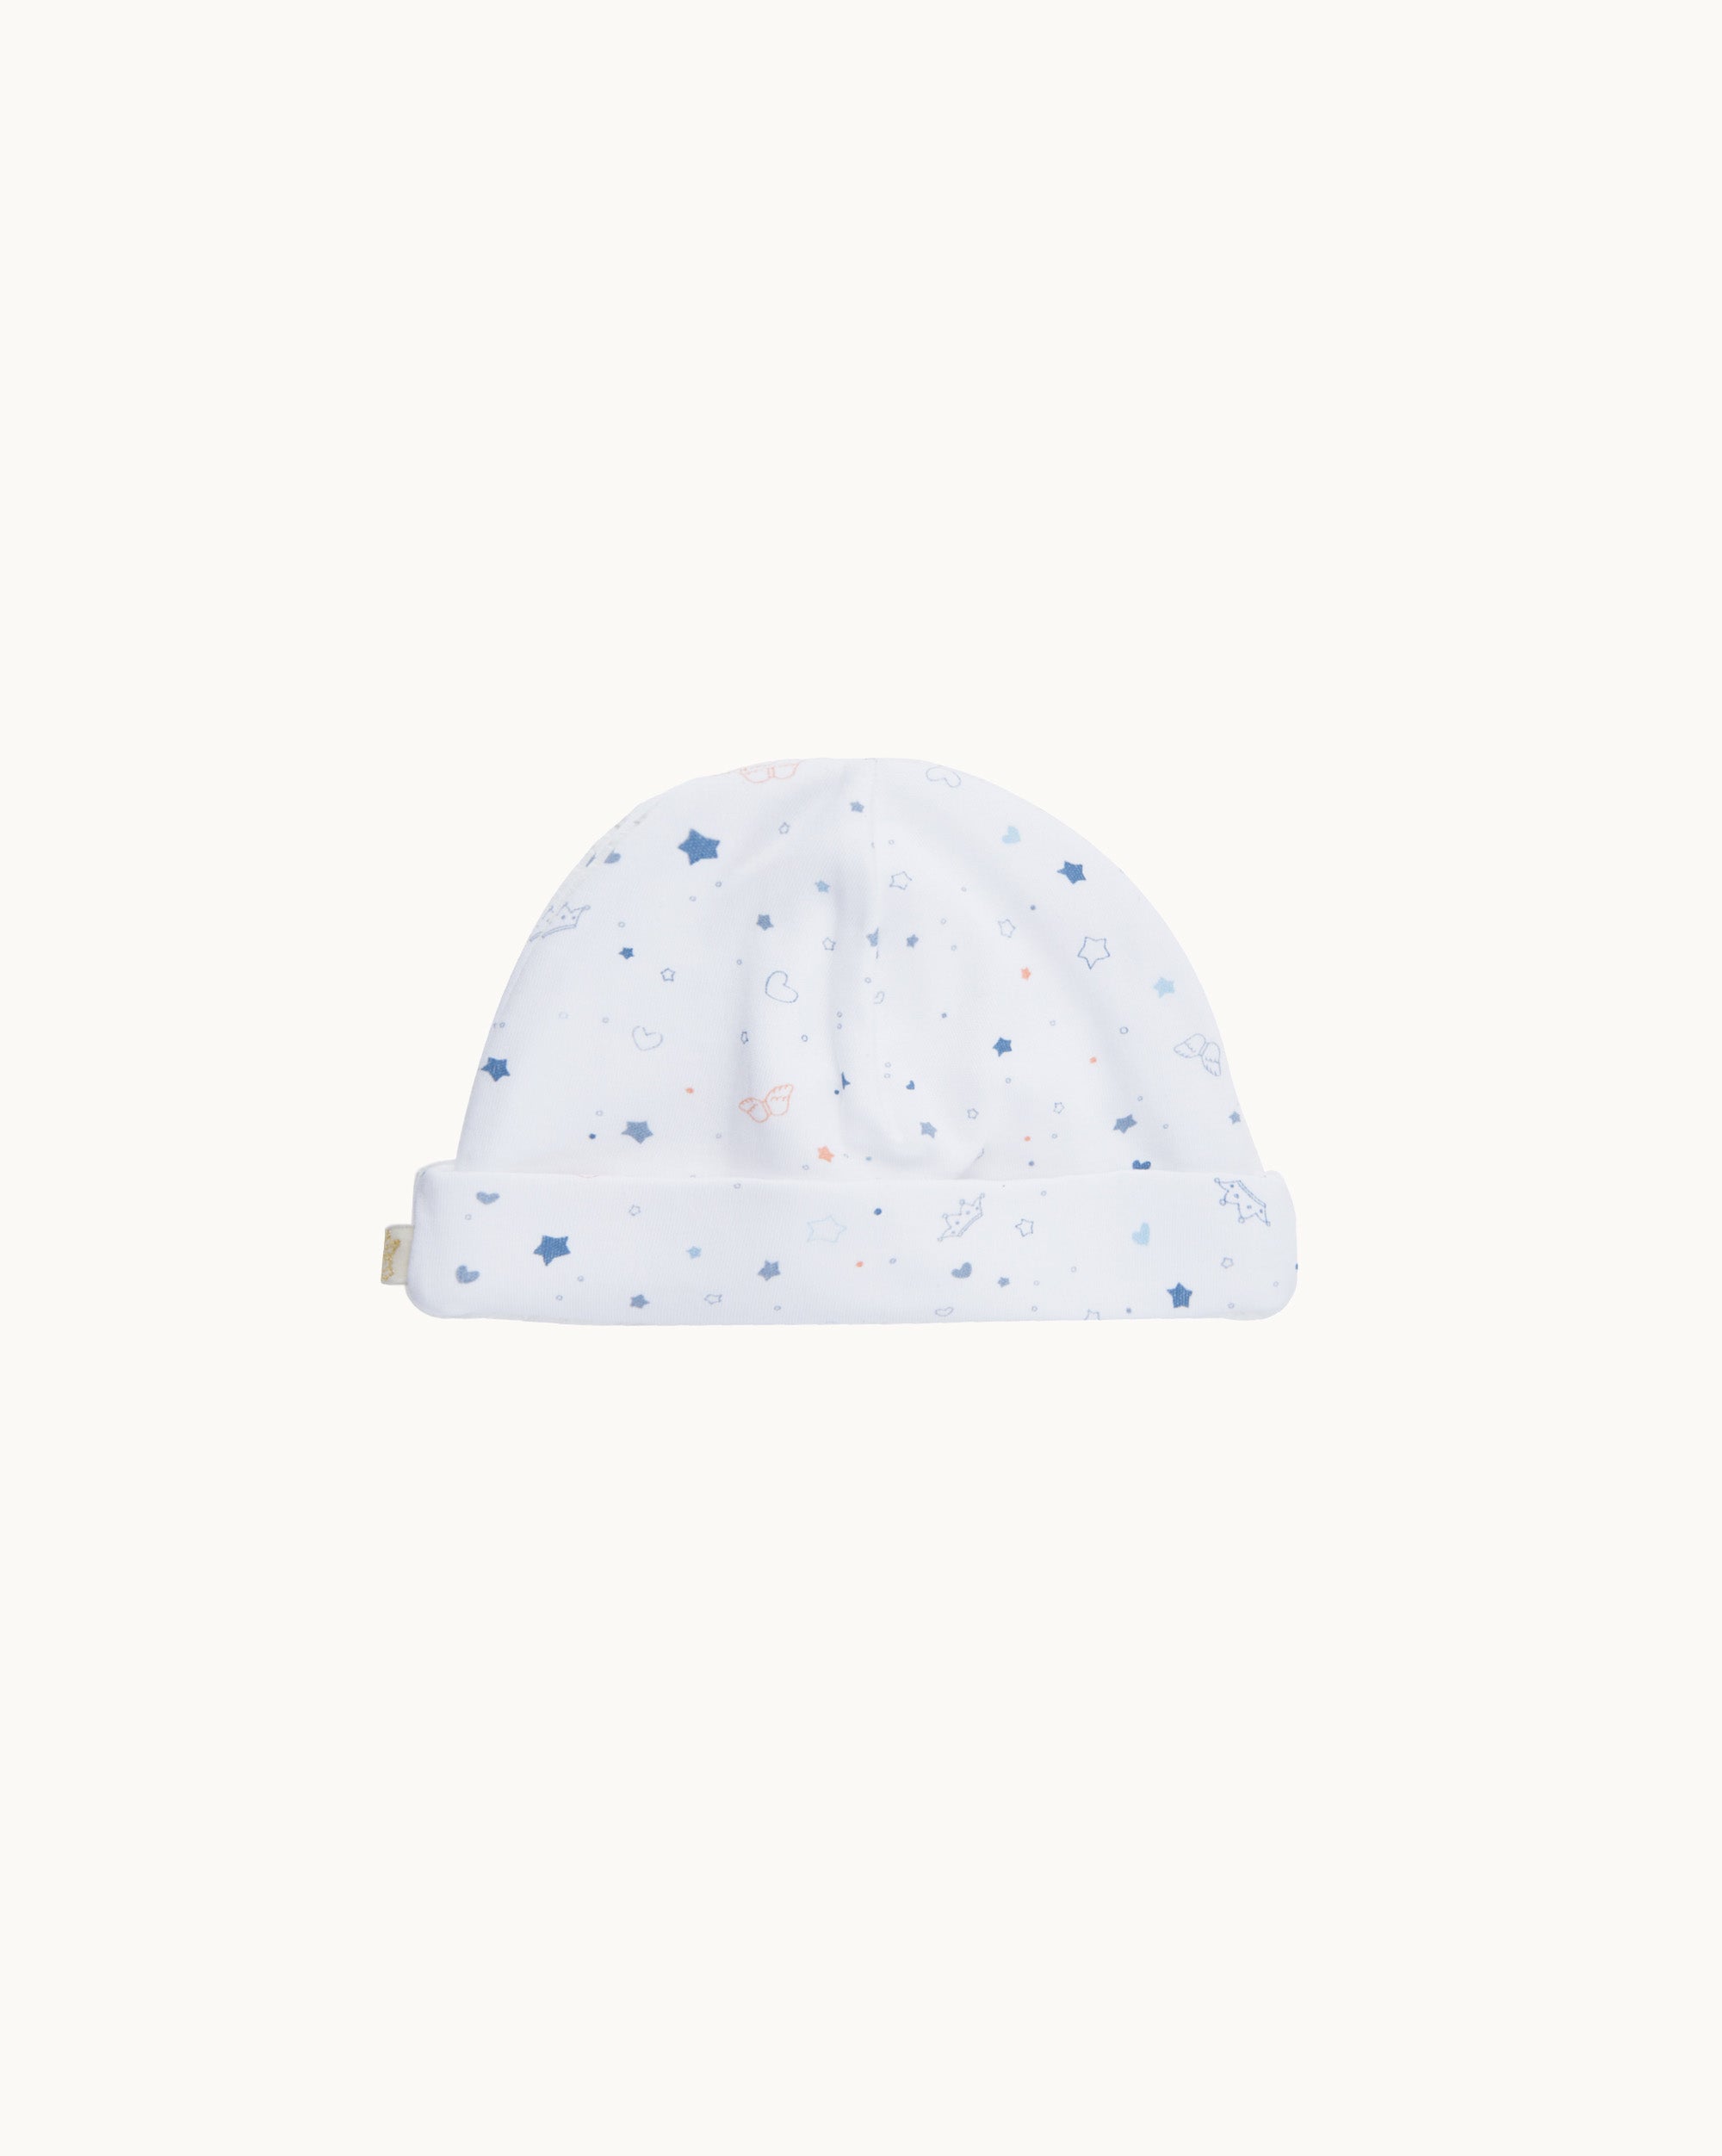 Star & Crown Print Hat, Bib and Mitten’s Set - Blue